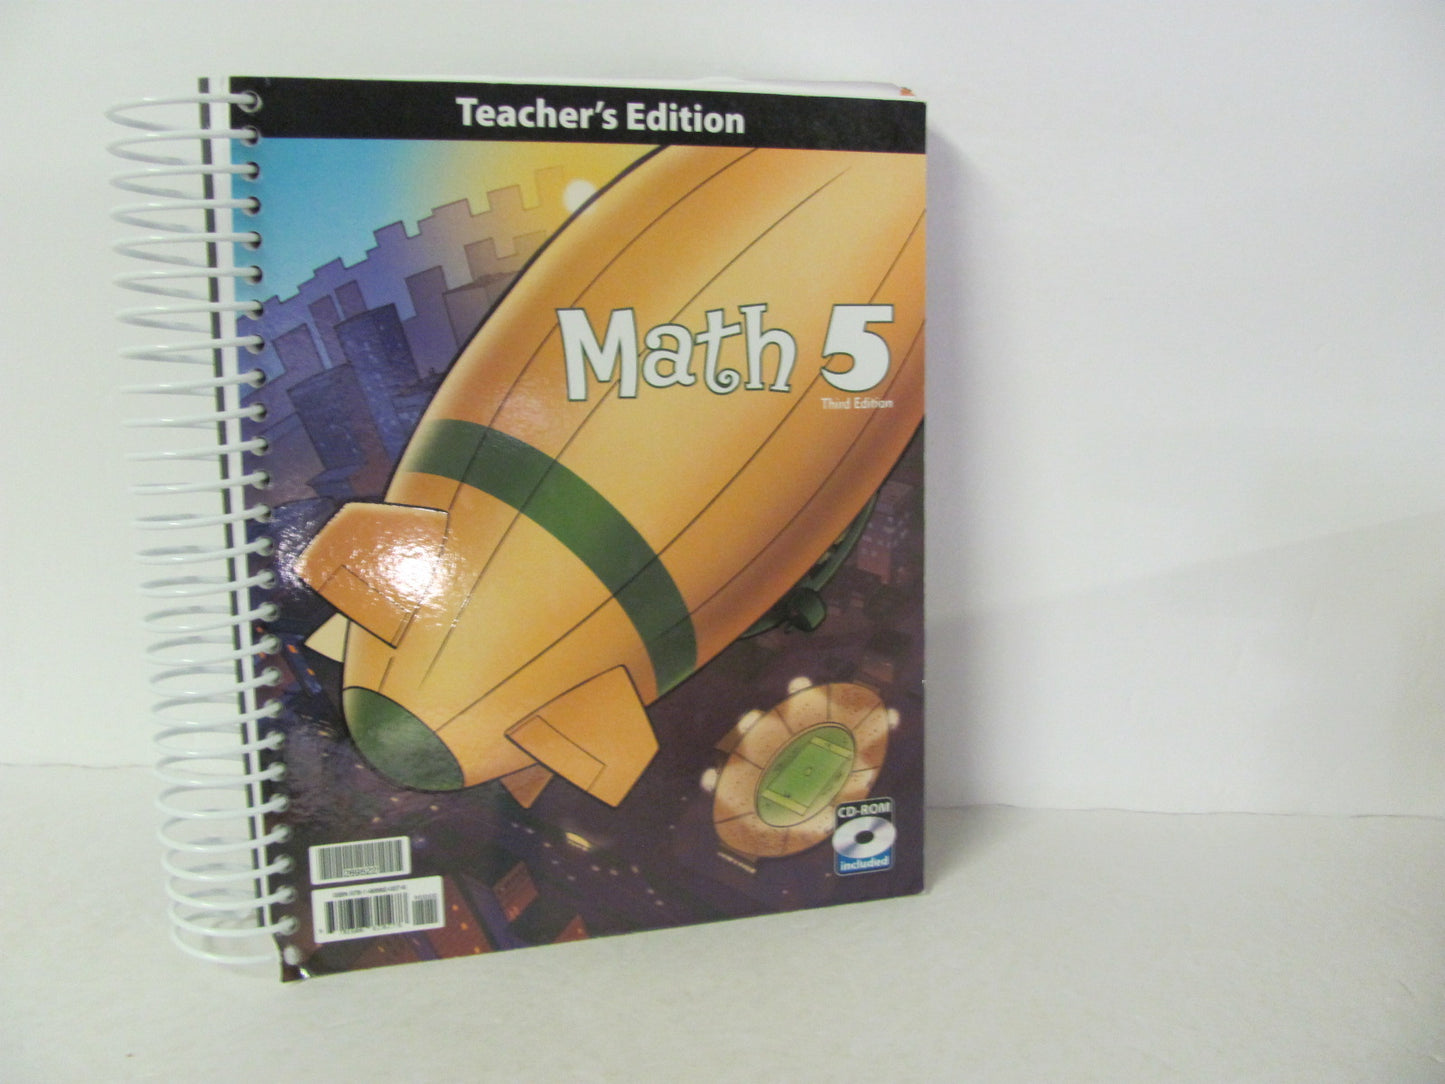 Math 5 BJU Press Teacher Edition  Pre-Owned 5th Grade Mathematics Textbooks